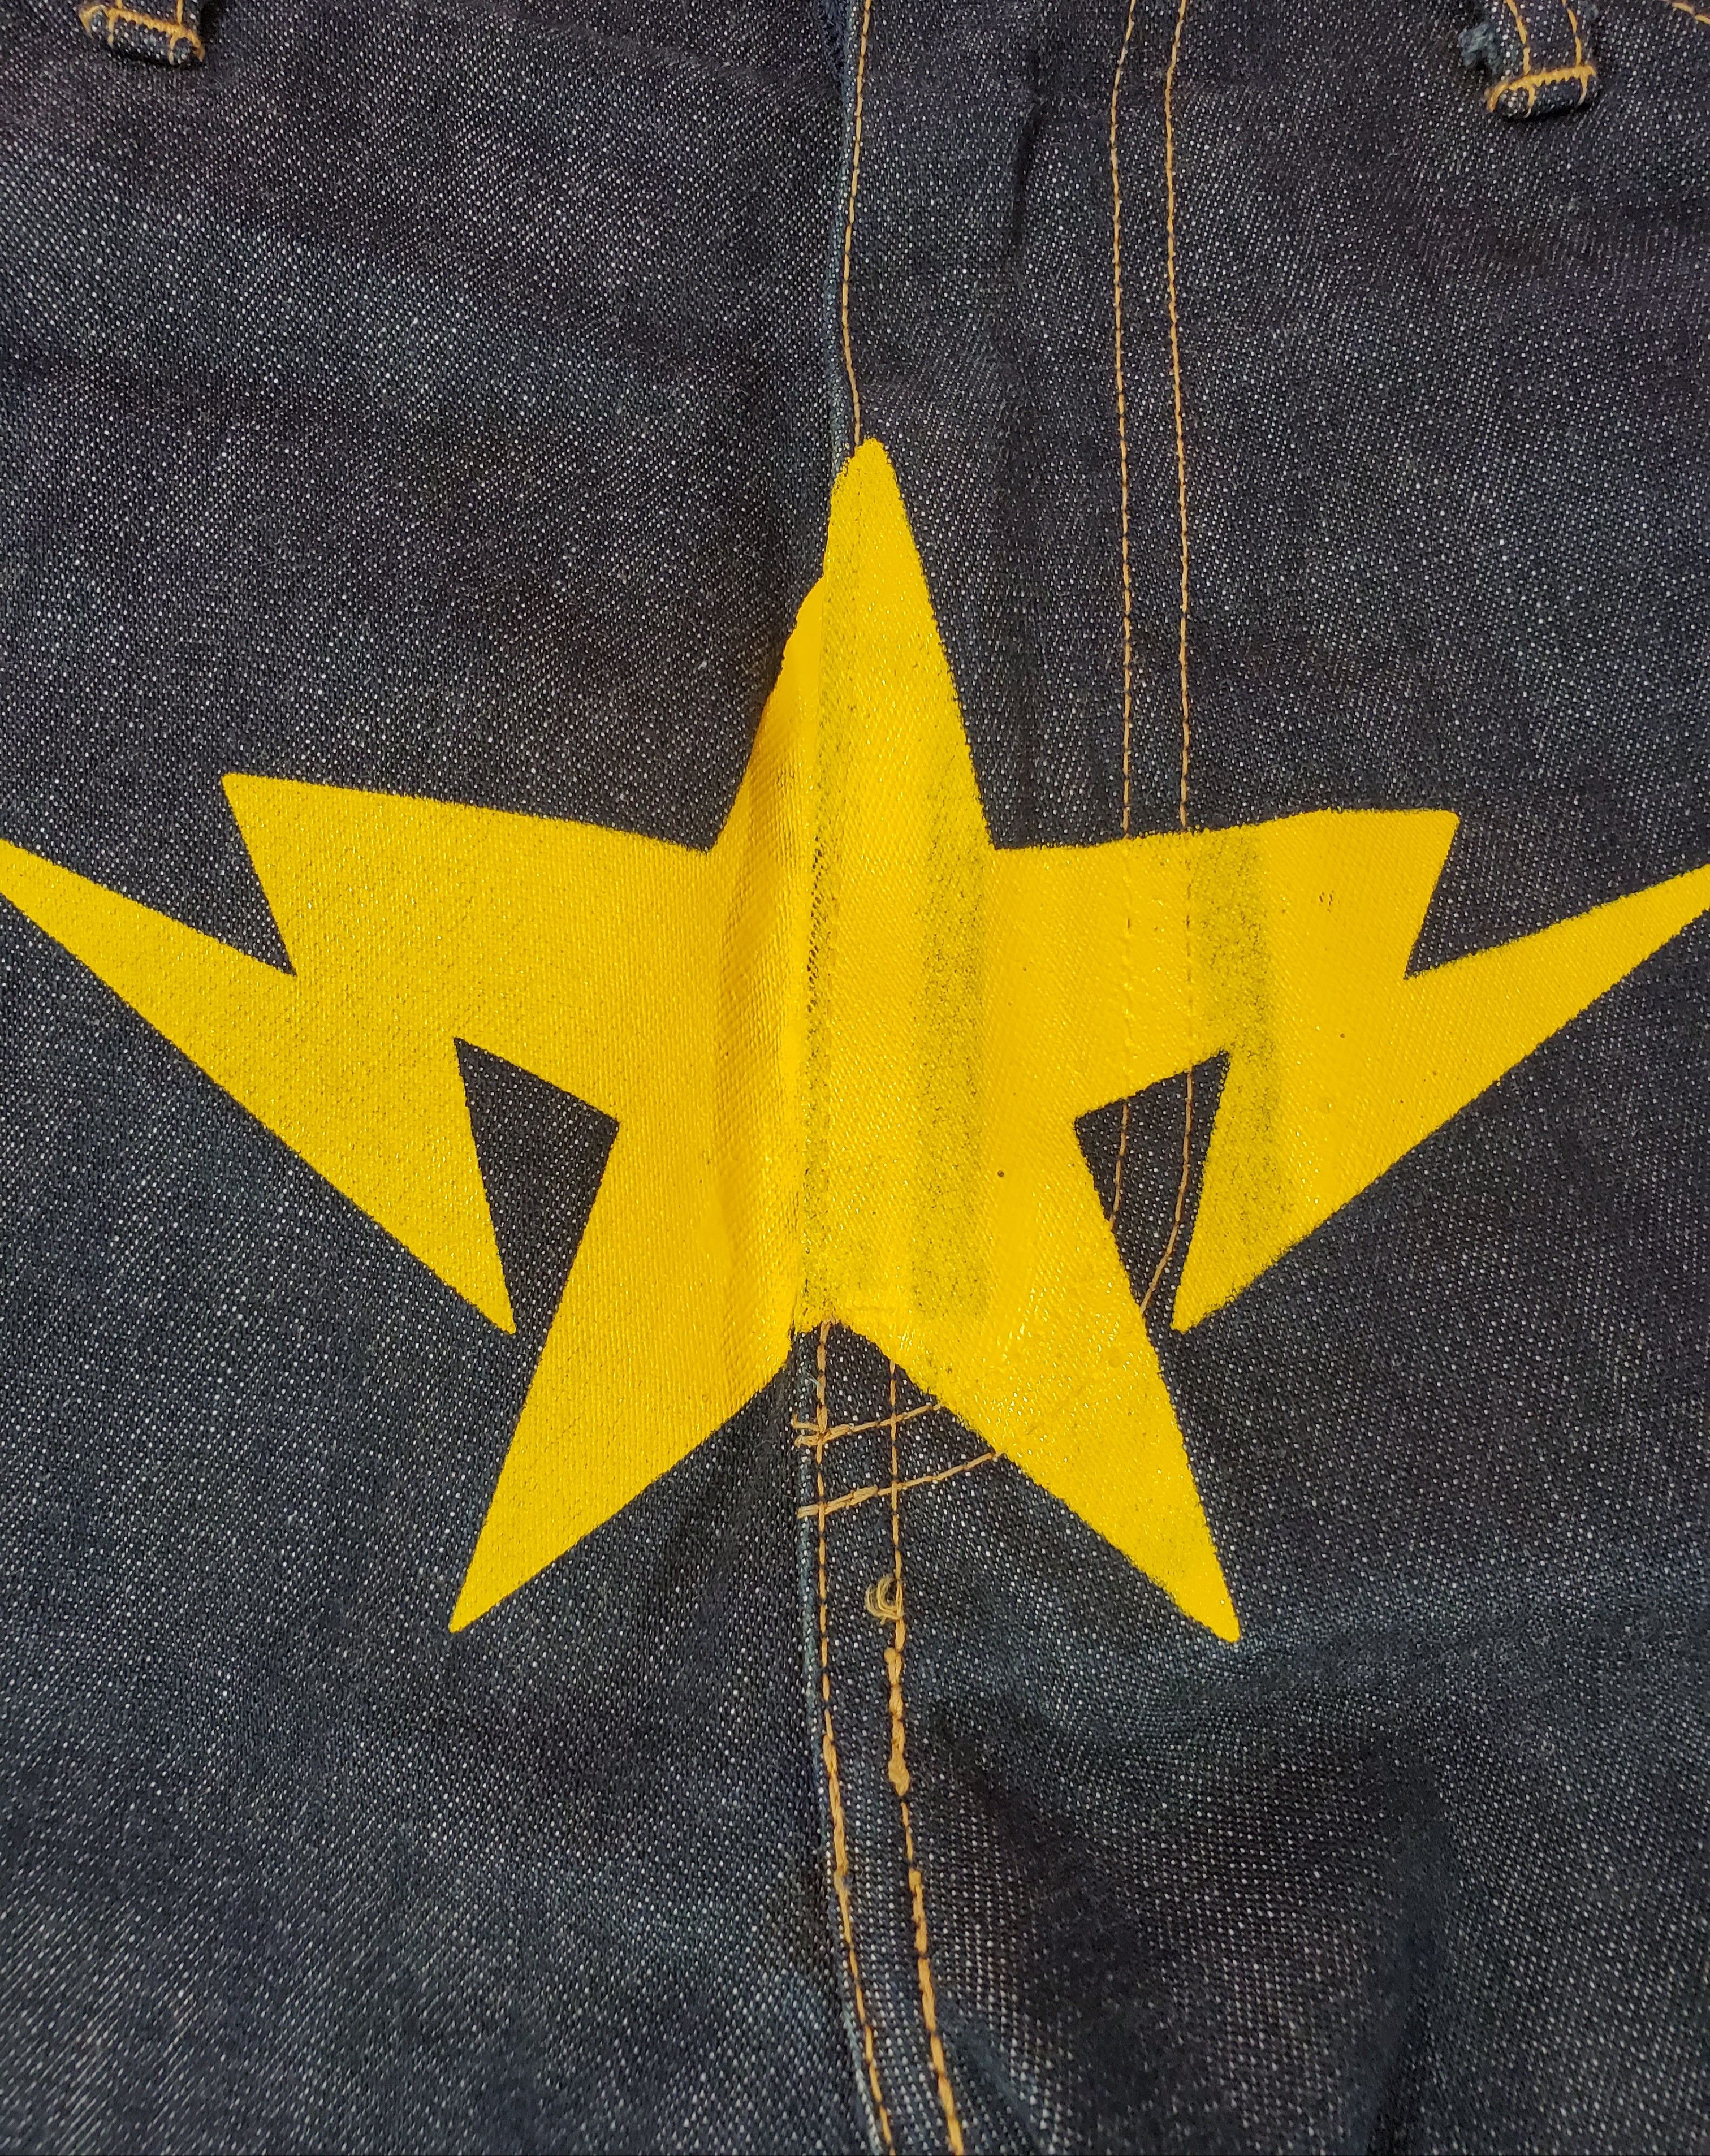 Bape Bape Twinsta STA Yellow Print Dark Denim Jeans XL Bapesta Size US 38 / EU 54 - 2 Preview